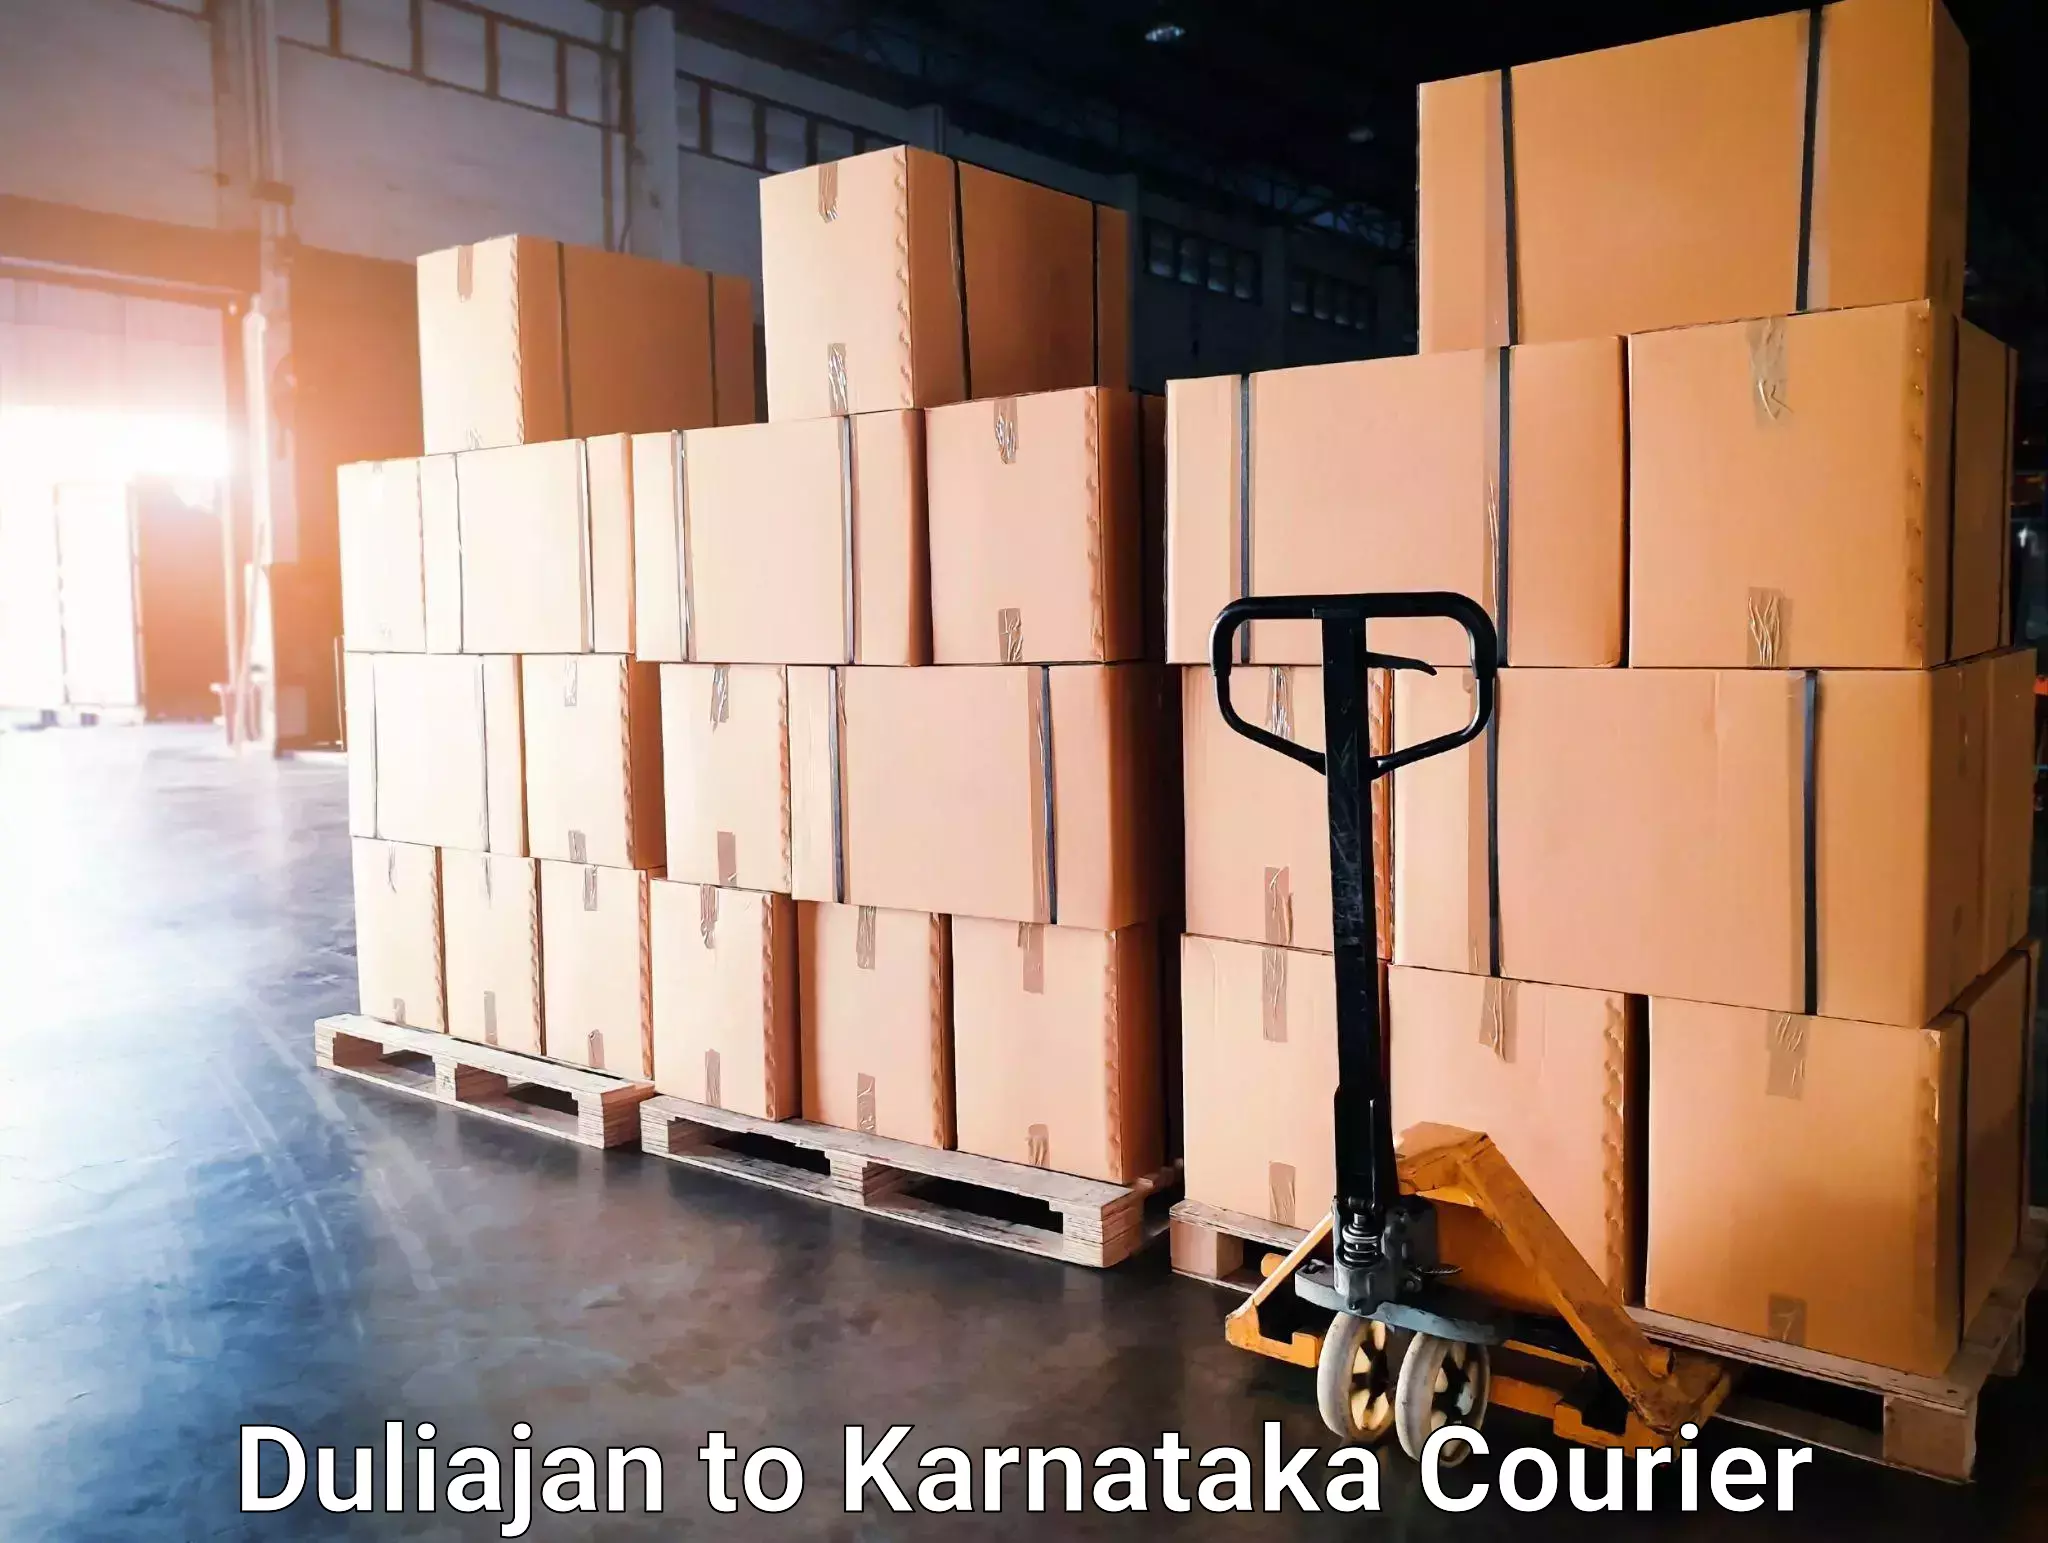 High-speed parcel service Duliajan to Hiriyur